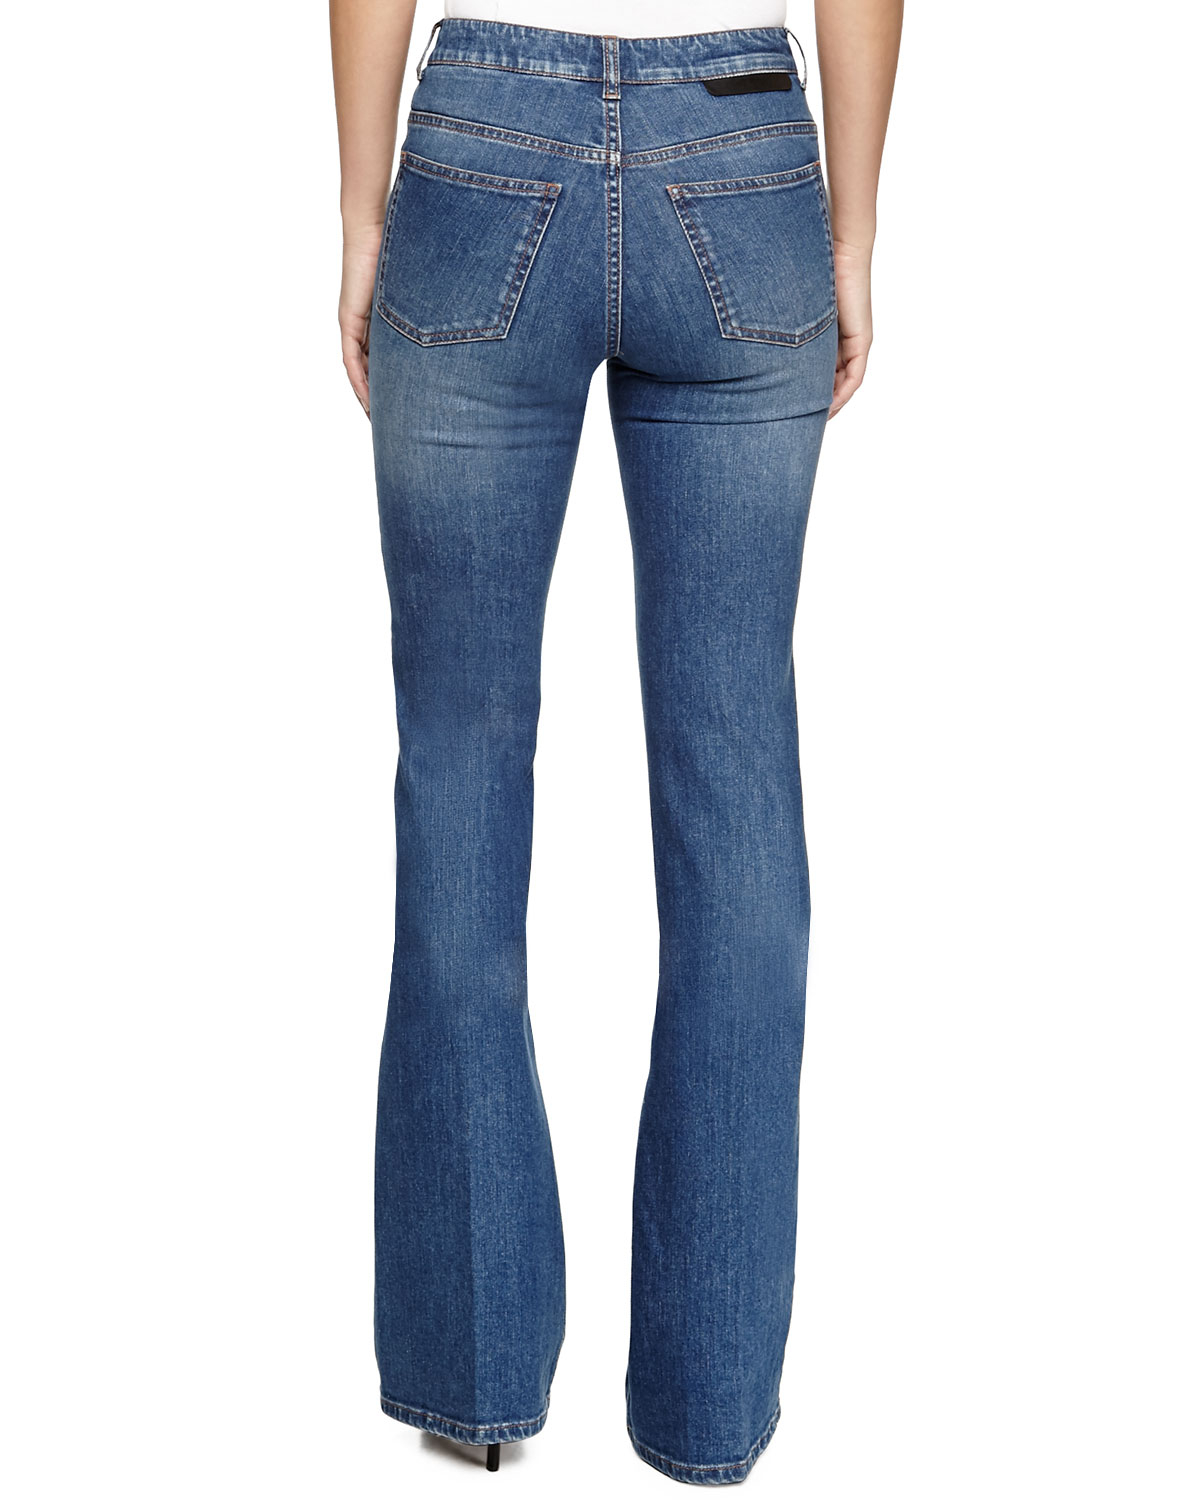 Lyst - Stella Mccartney Straight-Leg High-Rise Faded Jeans in Blue